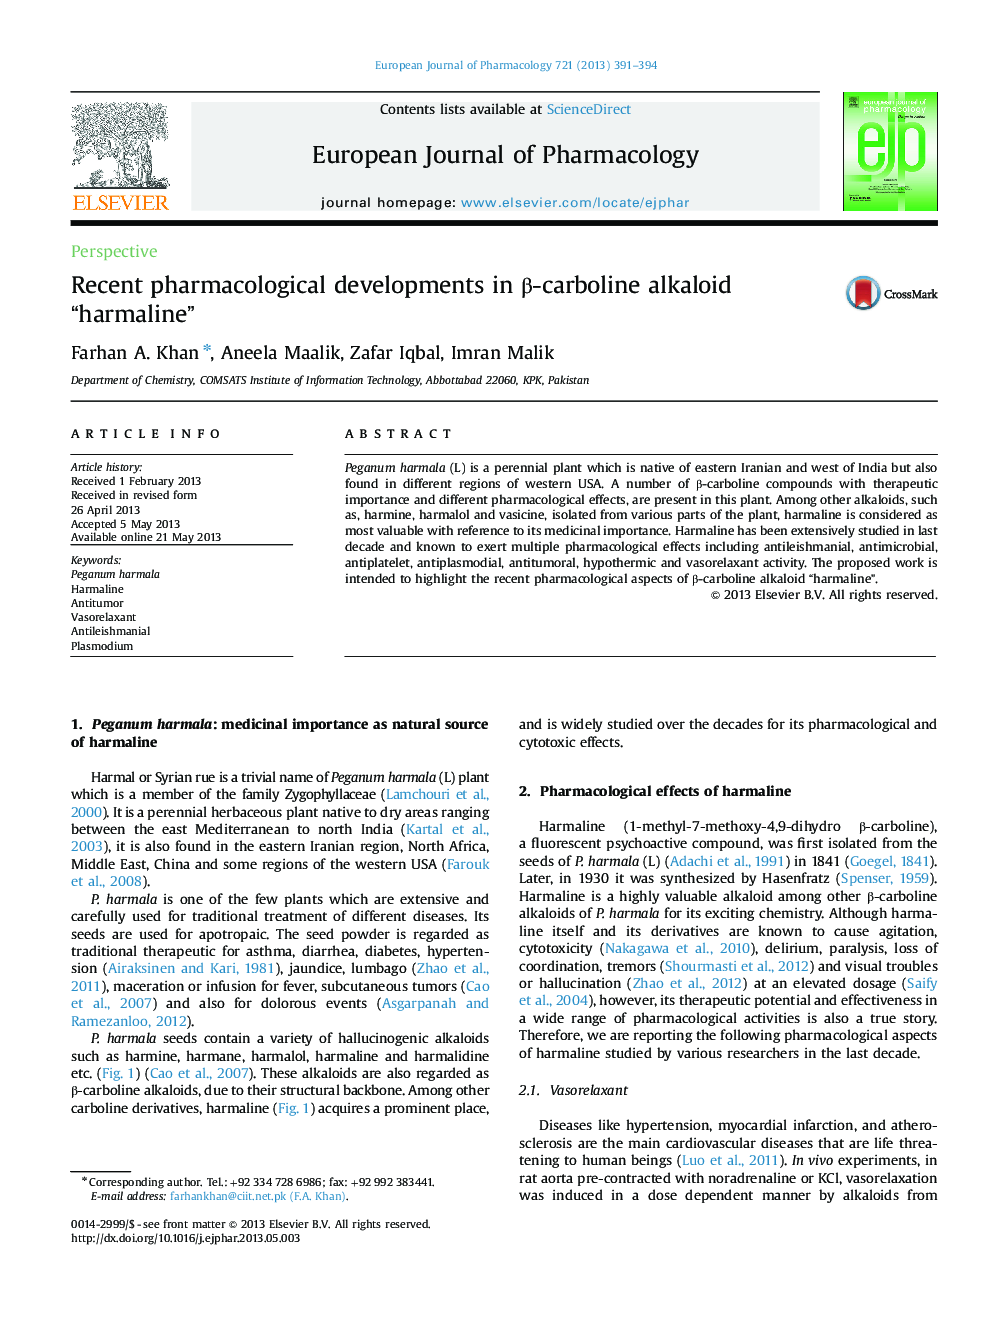 Recent pharmacological developments in Î²-carboline alkaloid “harmaline”